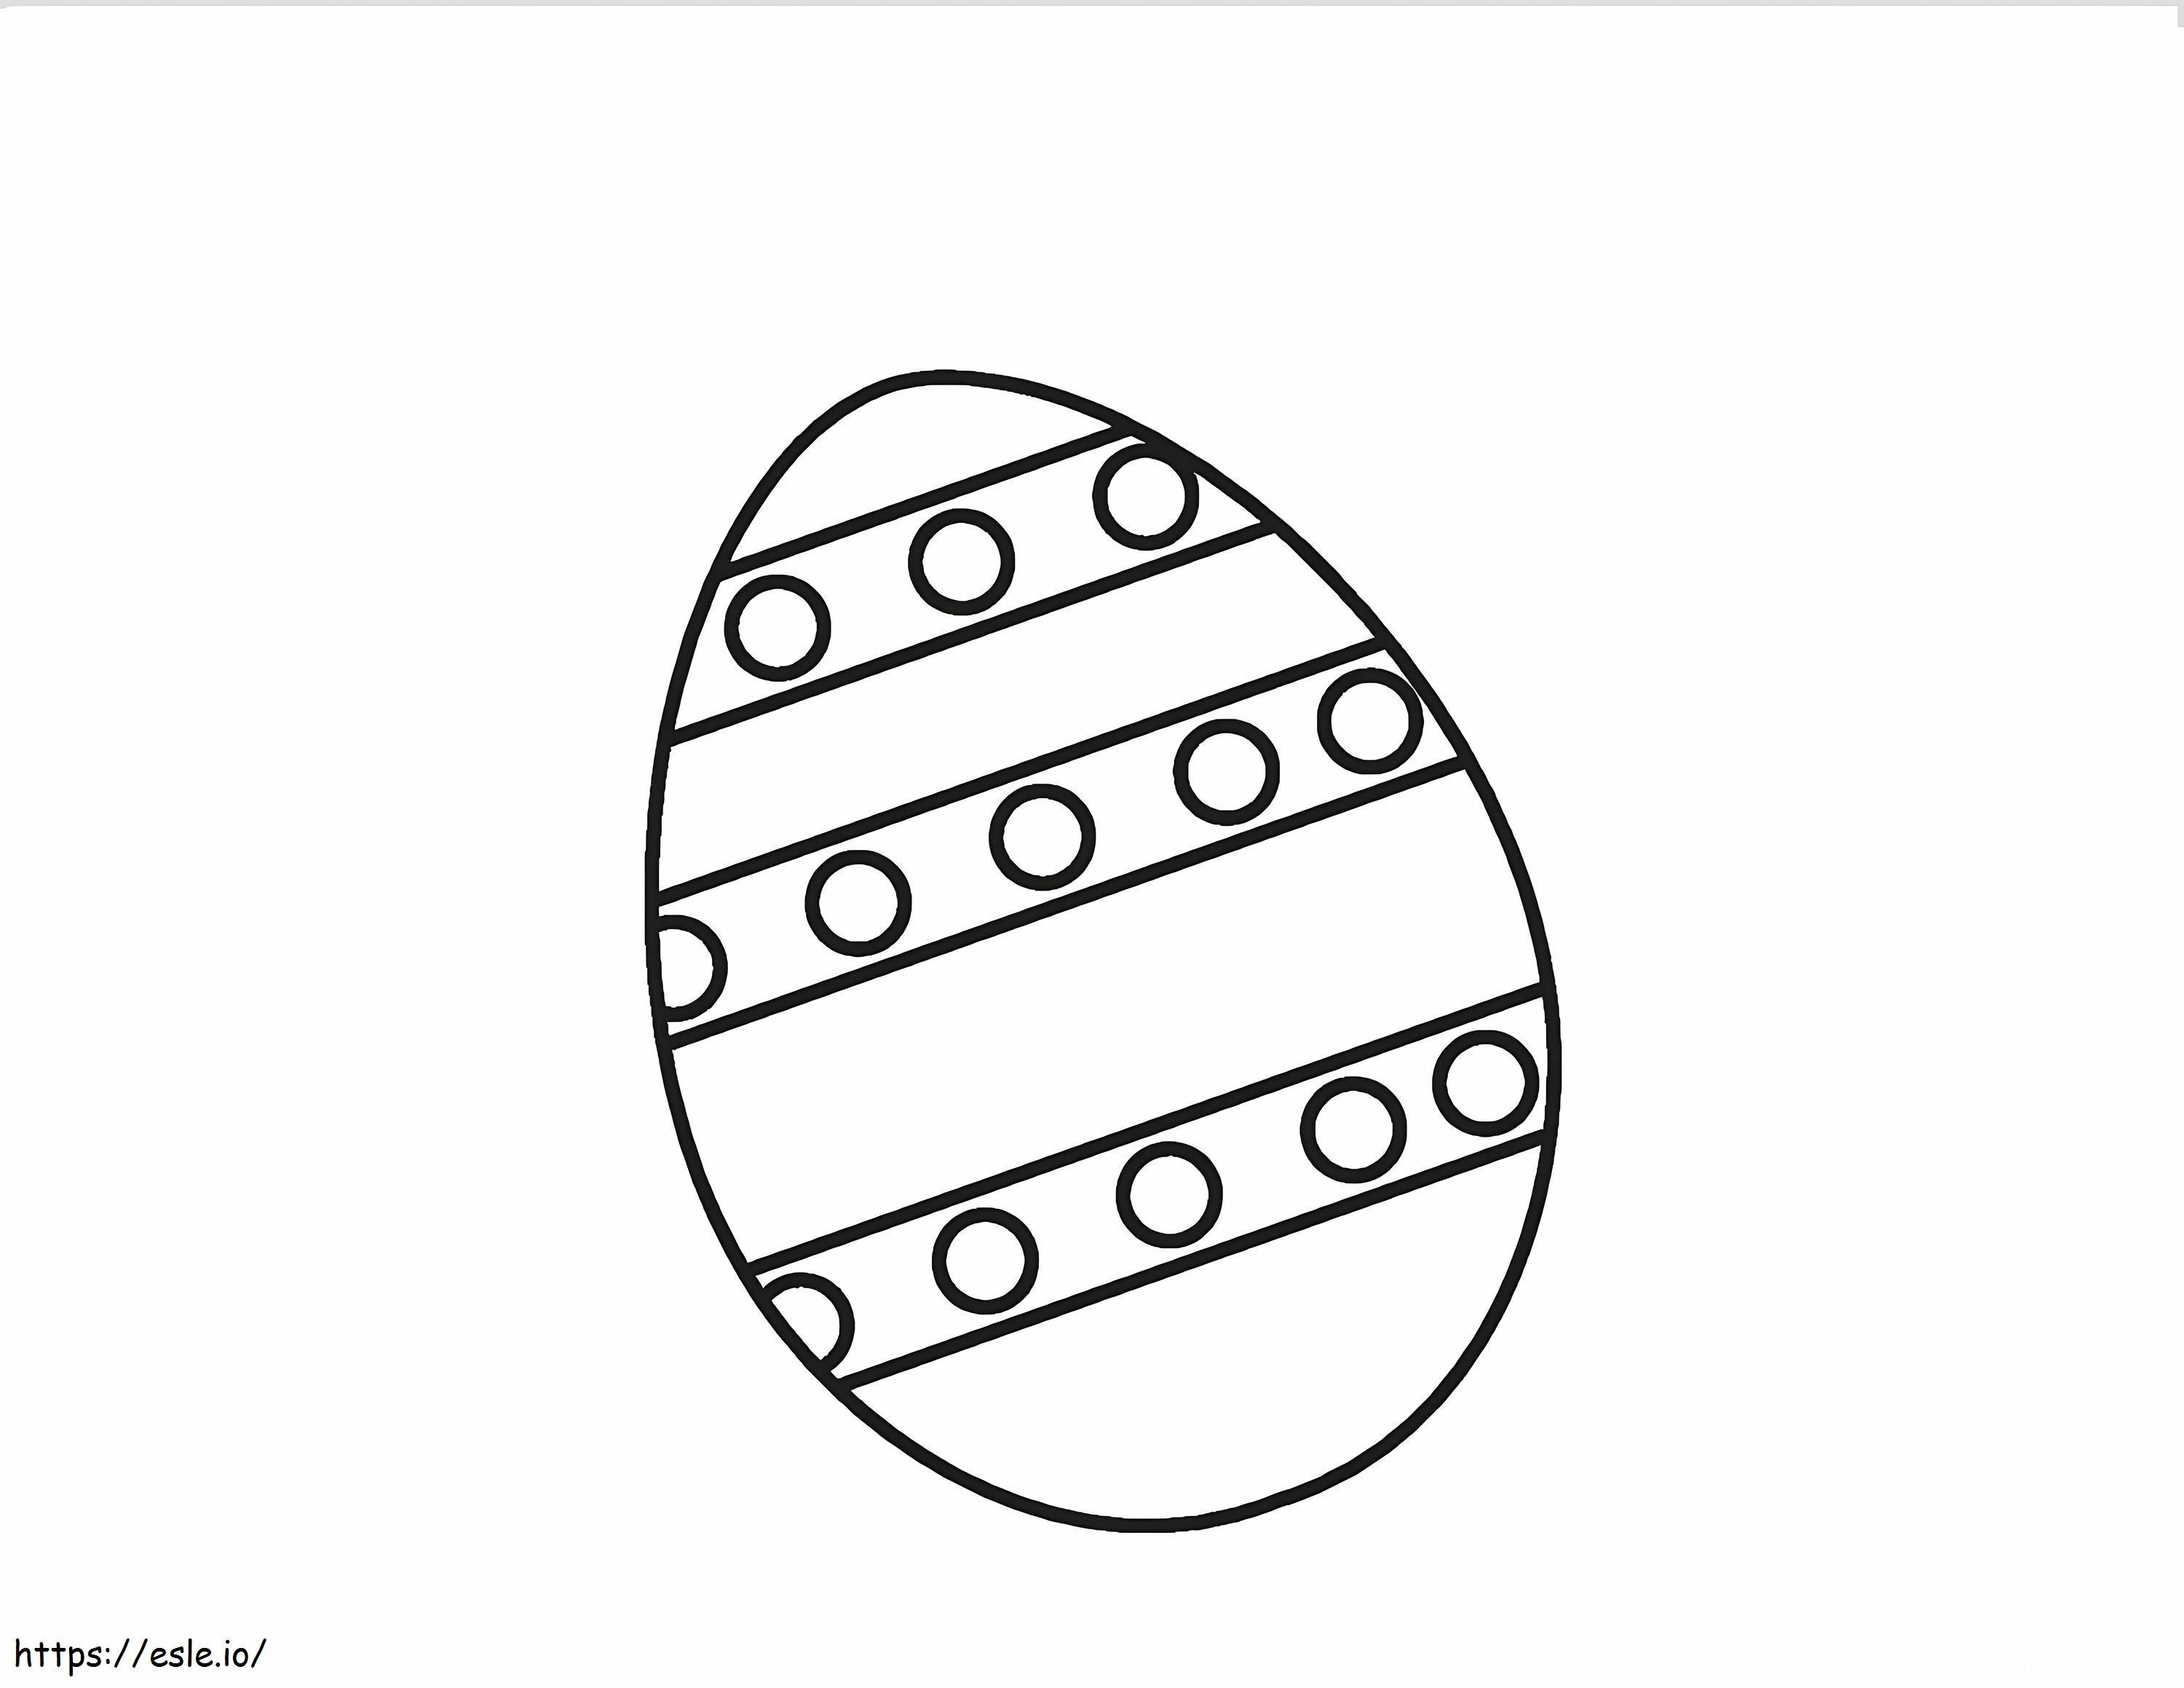 Muhteşem Yumurta boyama